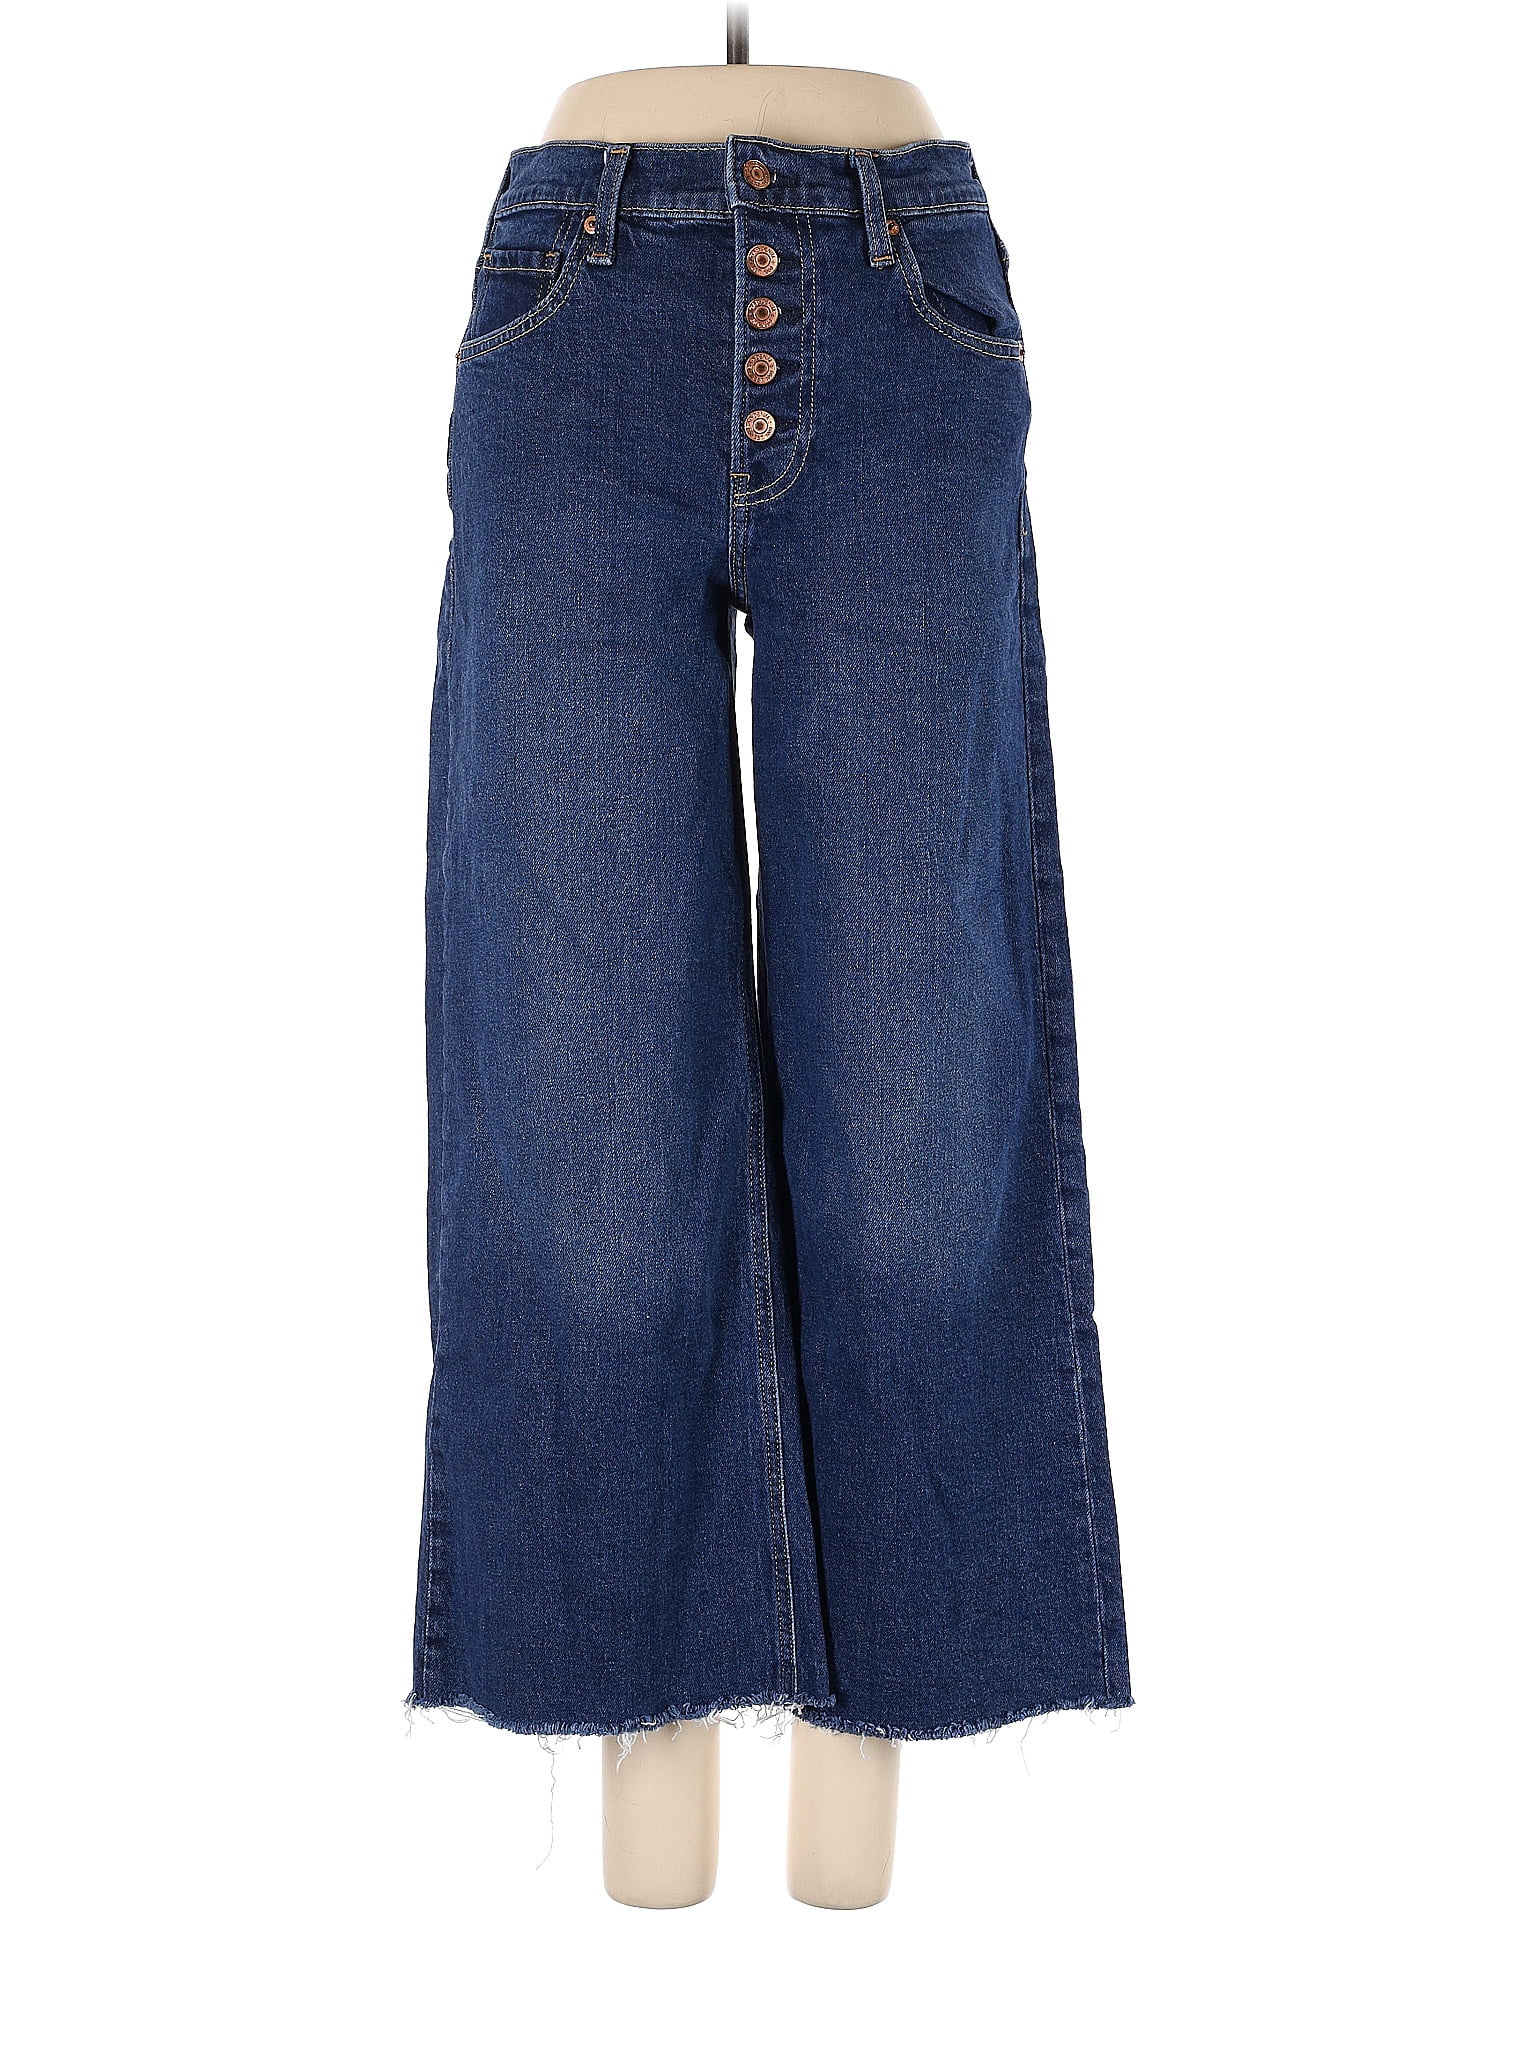 Gap Solid Blue Jeans Size 4 (Petite) - 67% off | ThredUp